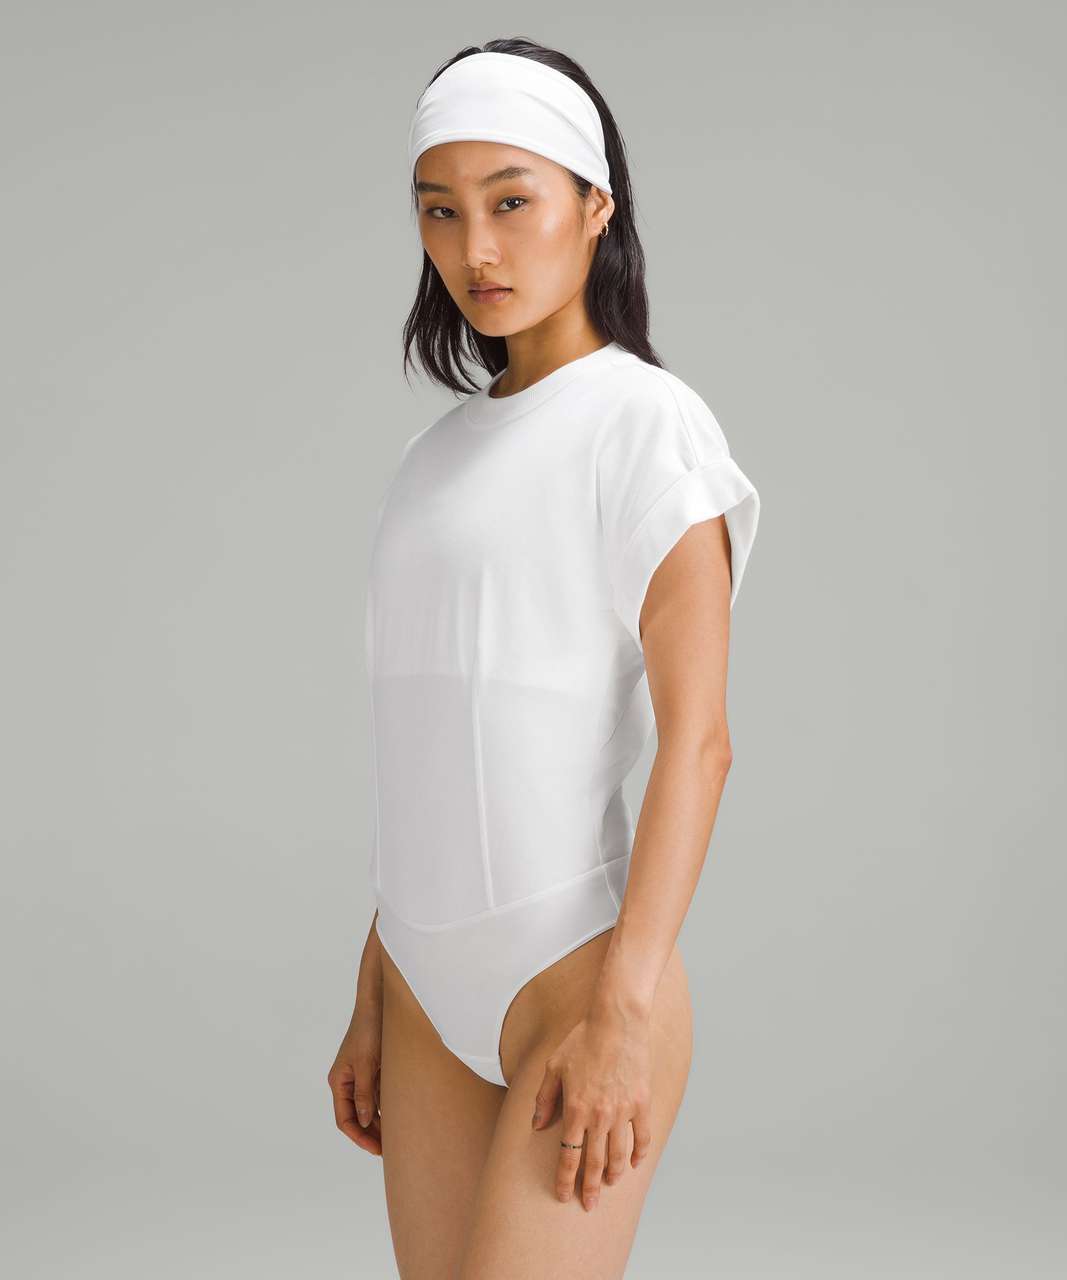 Cotton T Shirt Bodysuit - White